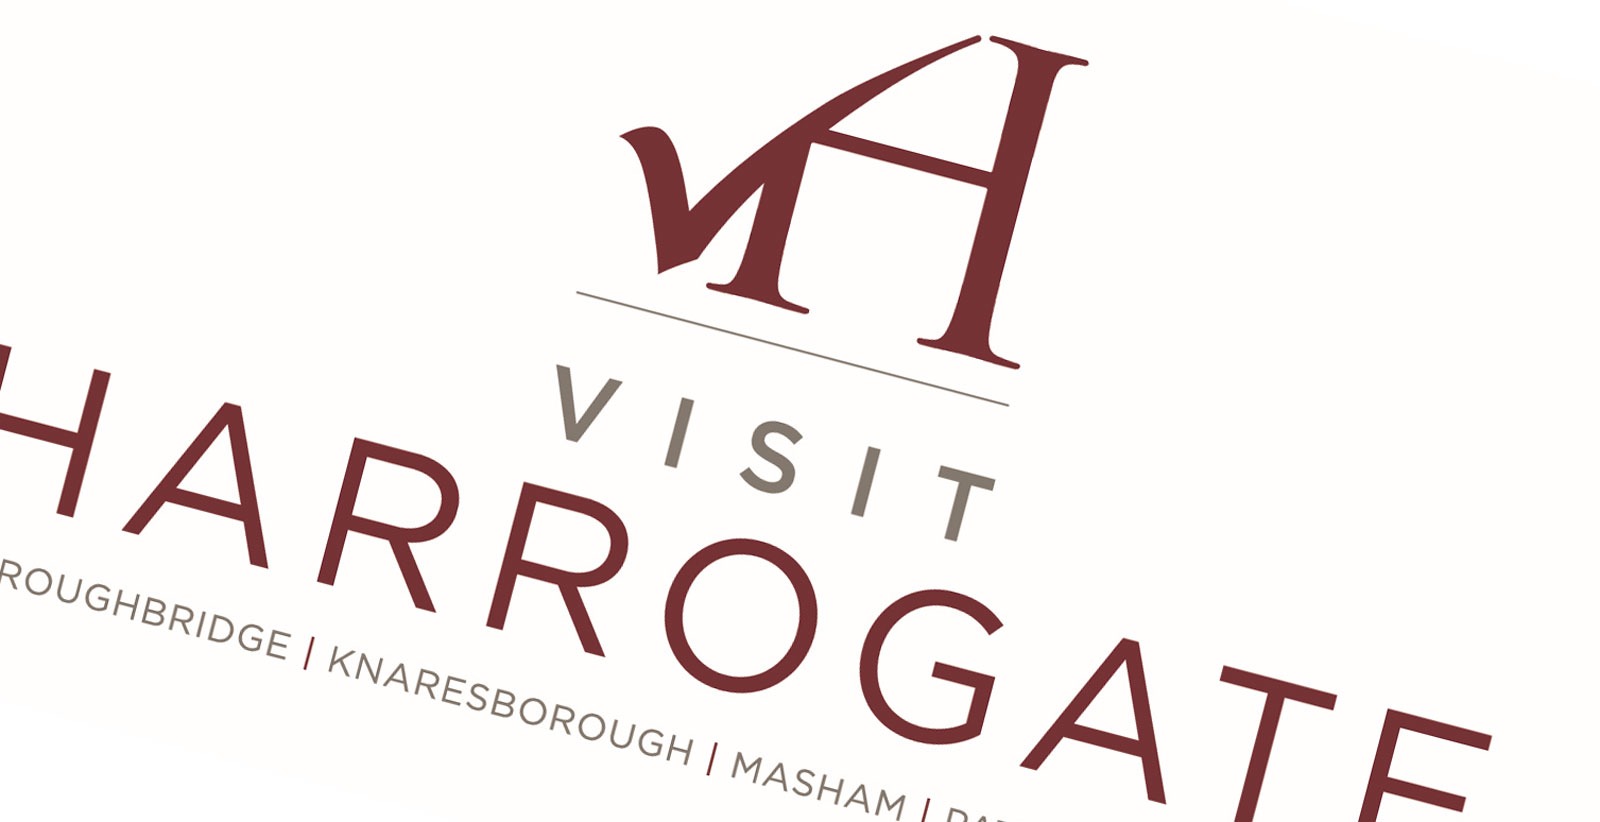 Visit Harrogate